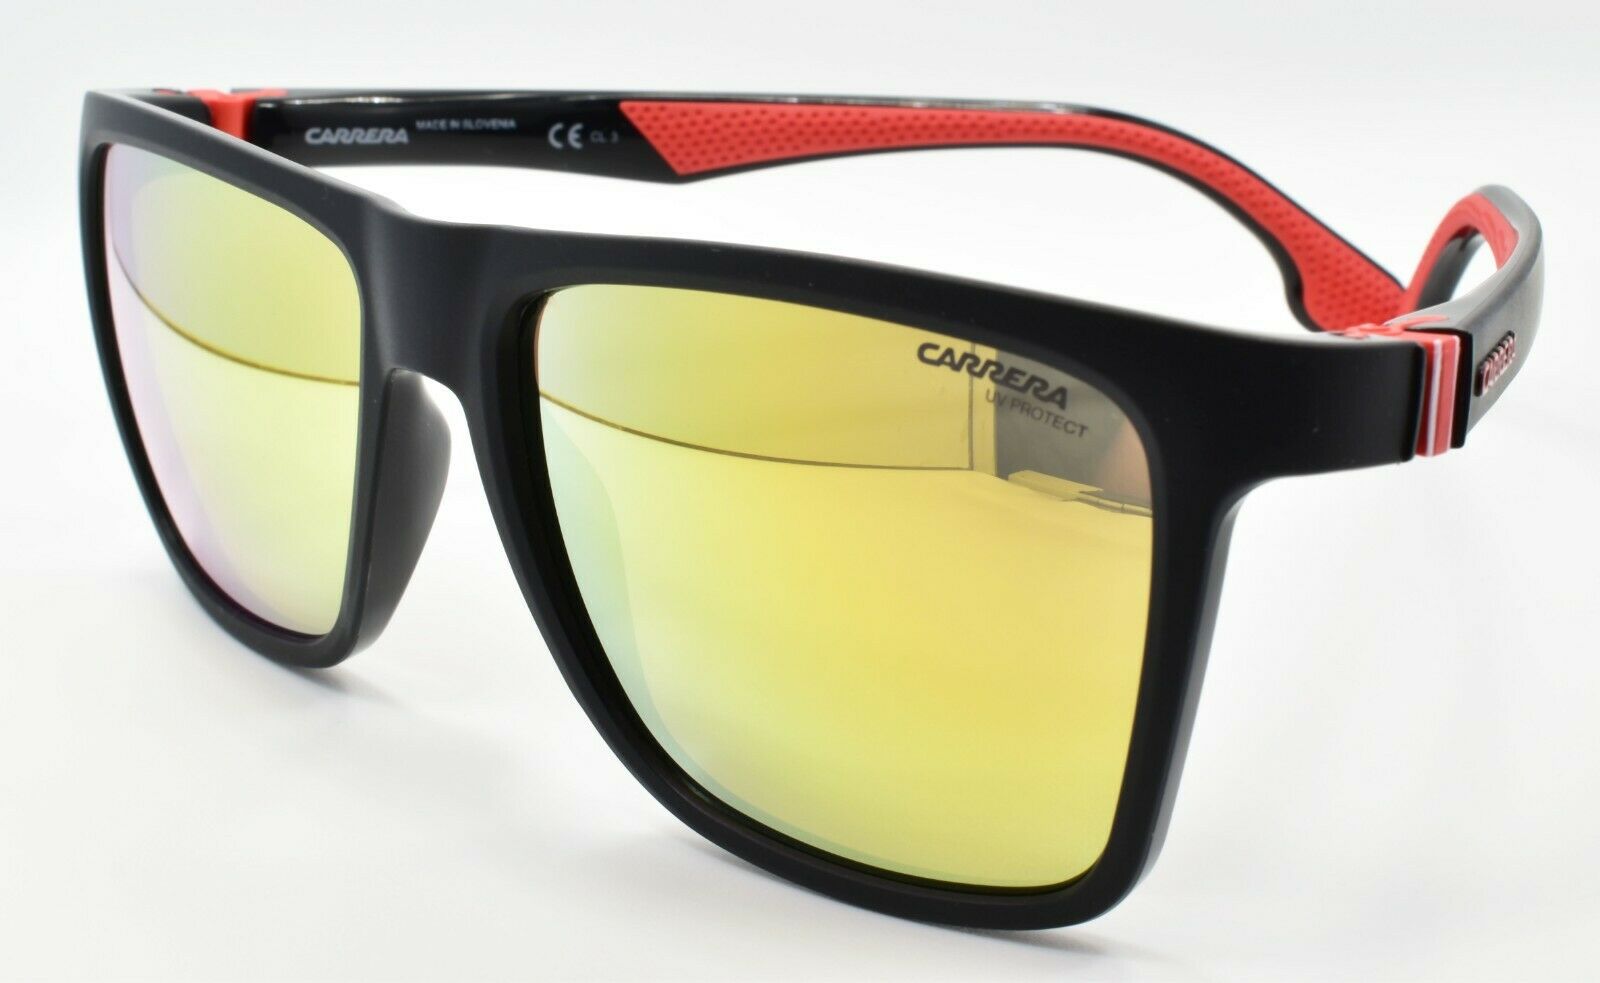 1-Carrera 5047/S 003 Men's Sunglasses 58-17-135 Matte Black / Gold Mirrored-716736032191-IKSpecs